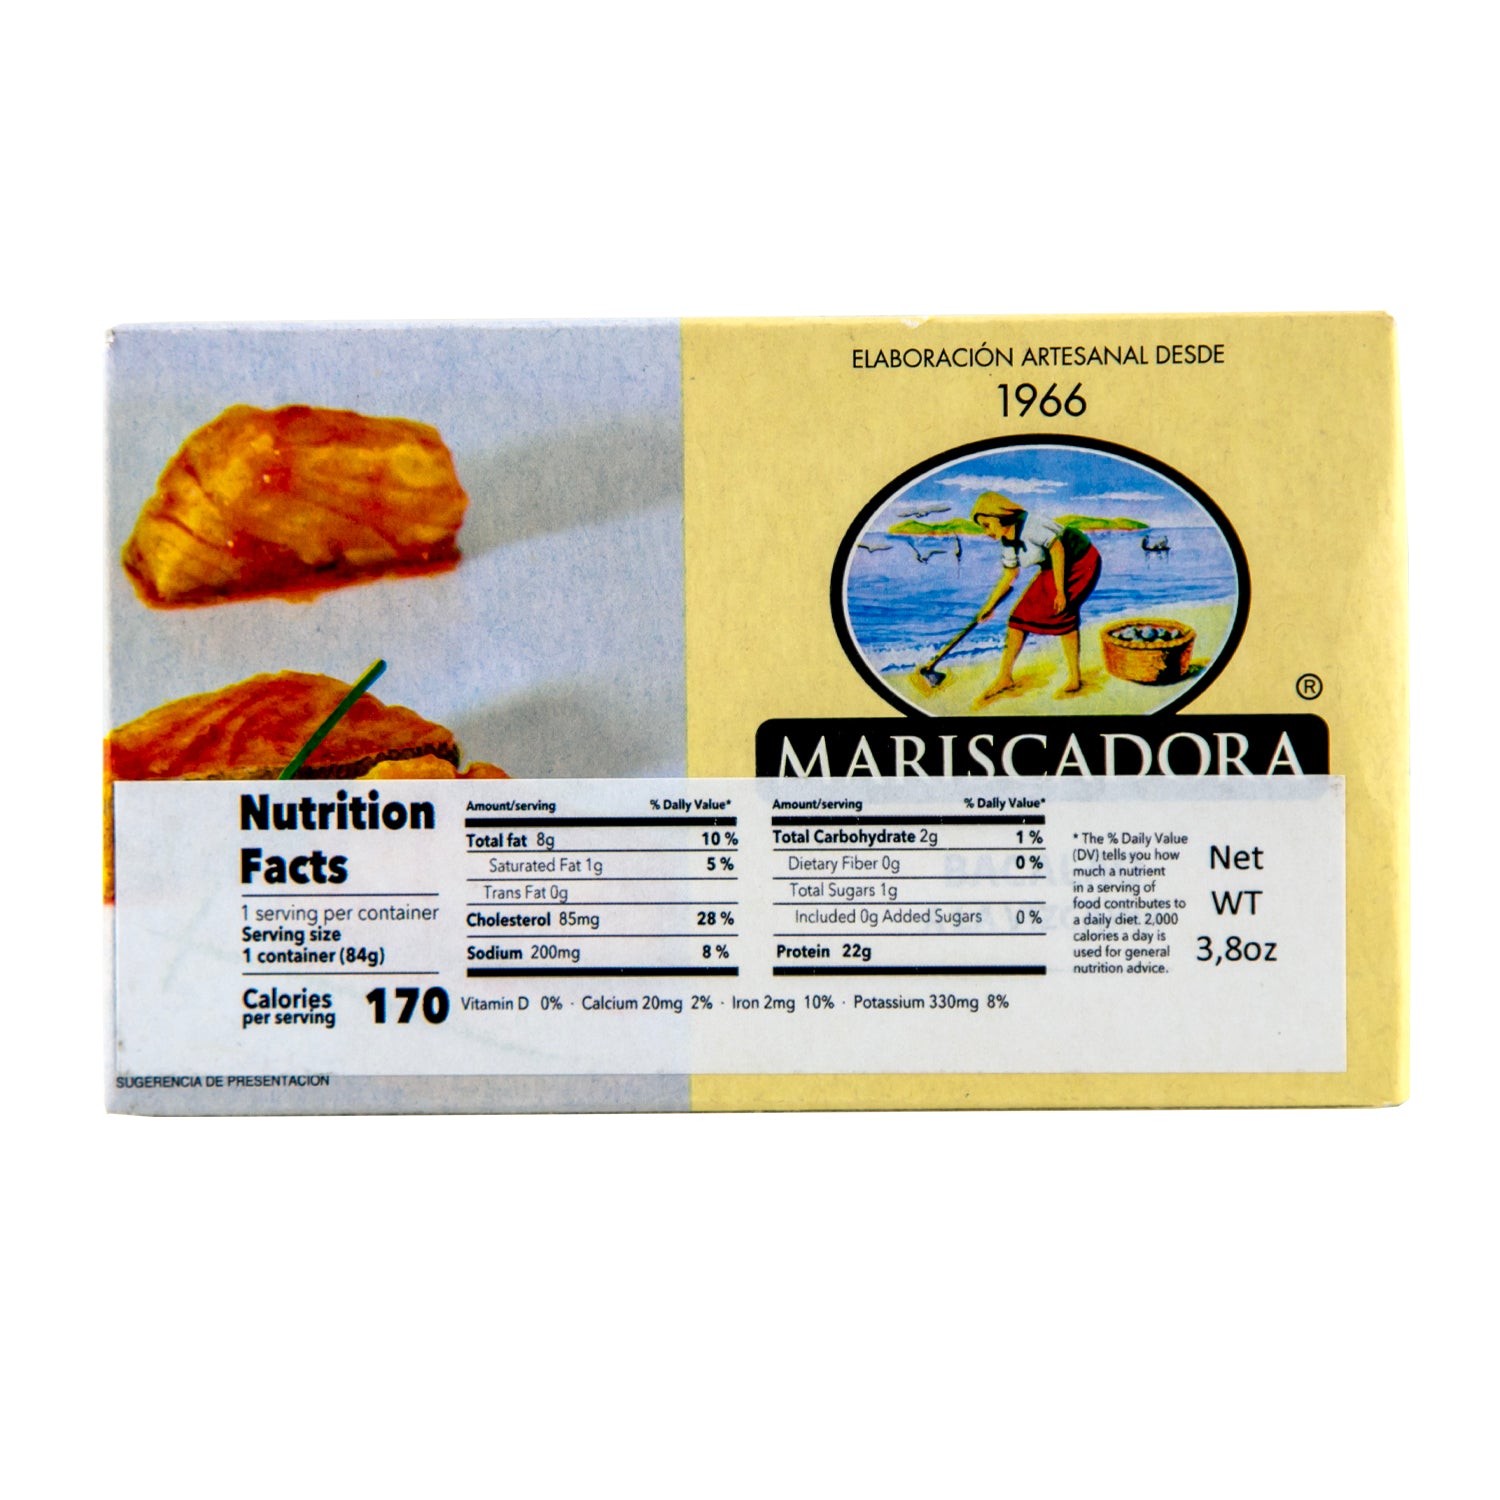 Mariscadora Cod-fish in biscay style sauce